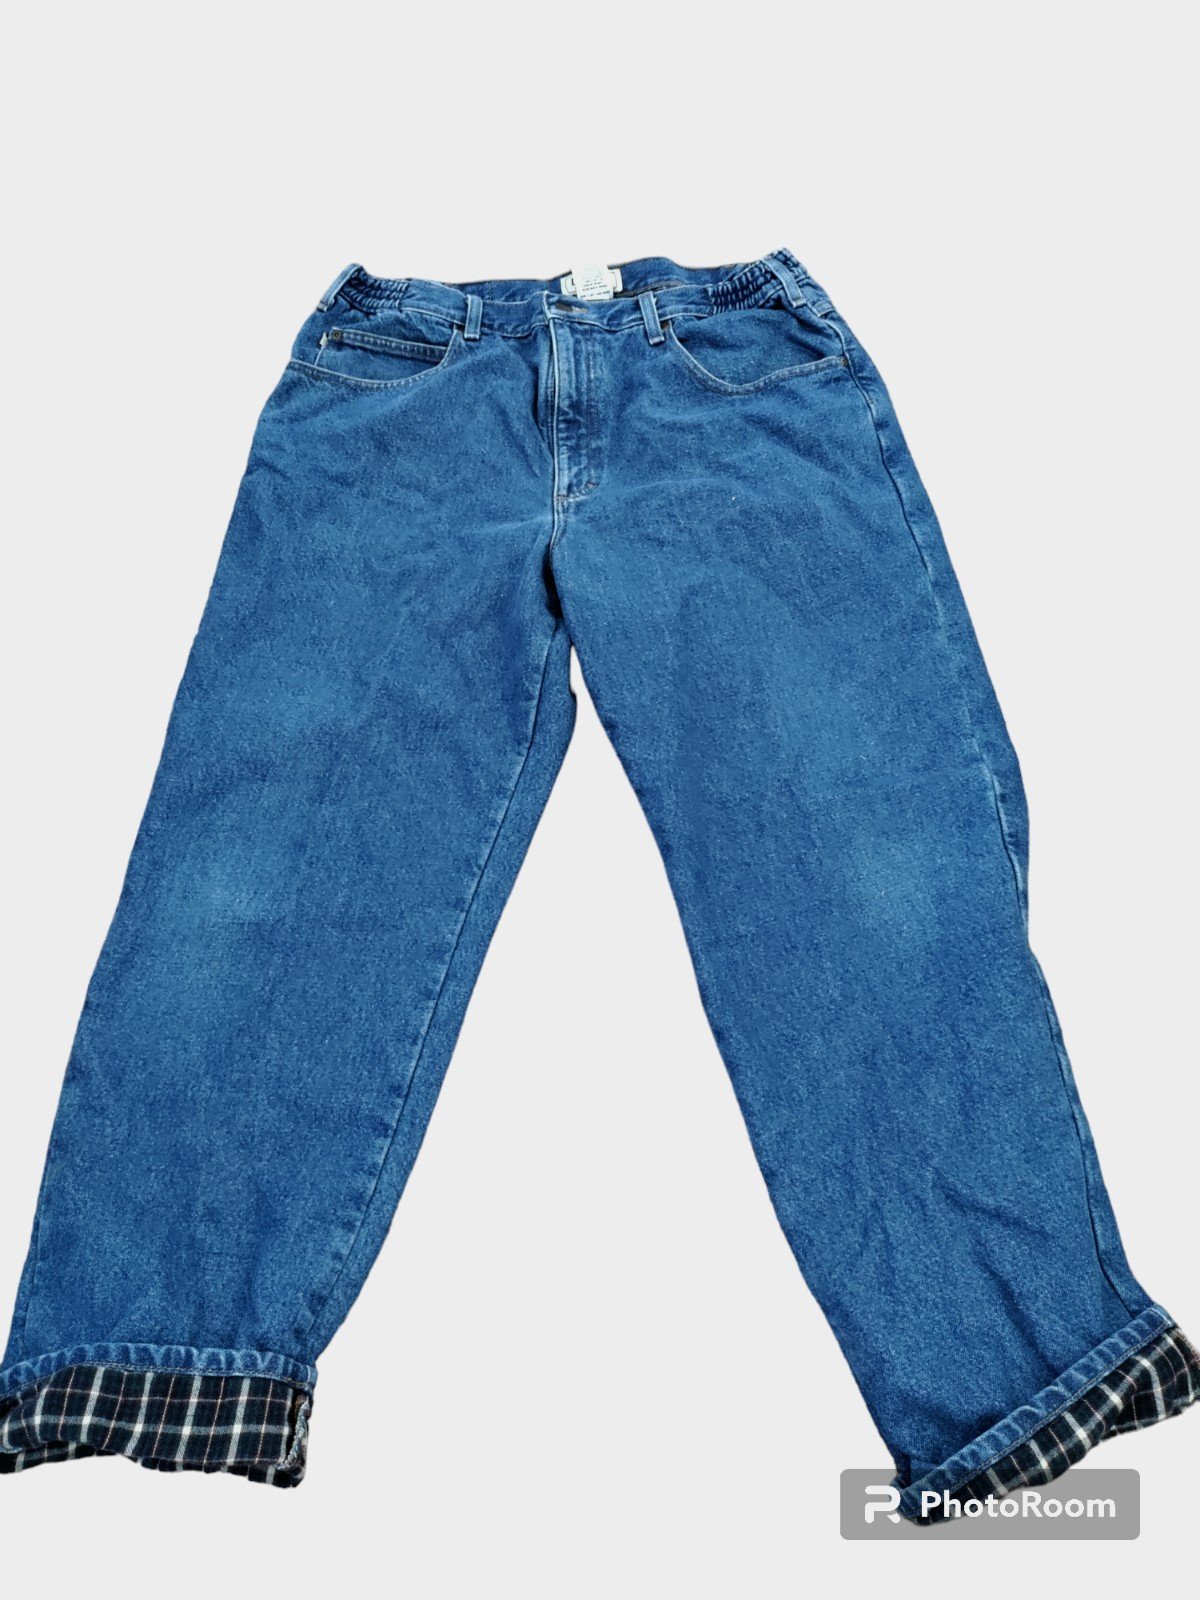 large discount L.L. Bean flannel lined jeans nzjAUPog7 online store